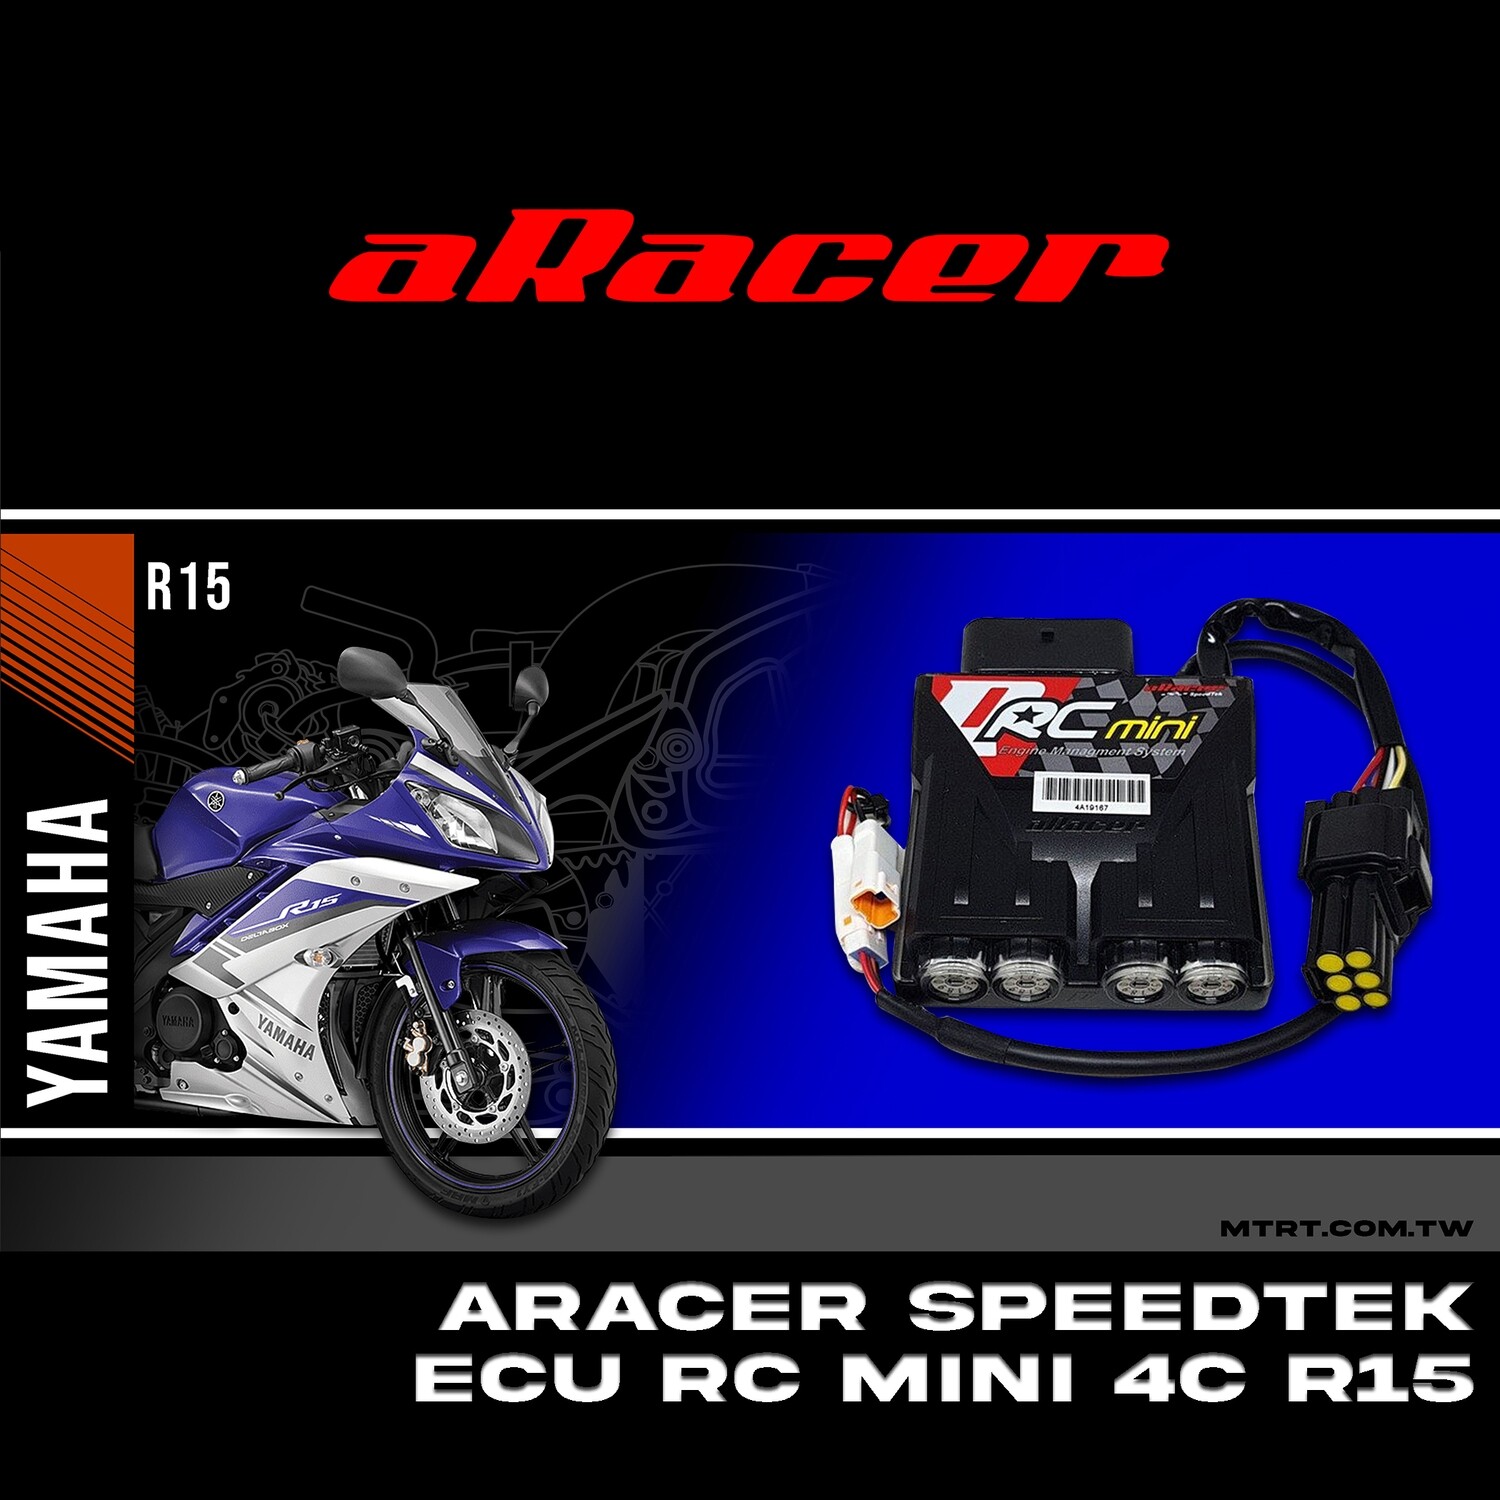 ARACER speedtek ECU RC Mini 4C (2017) R15